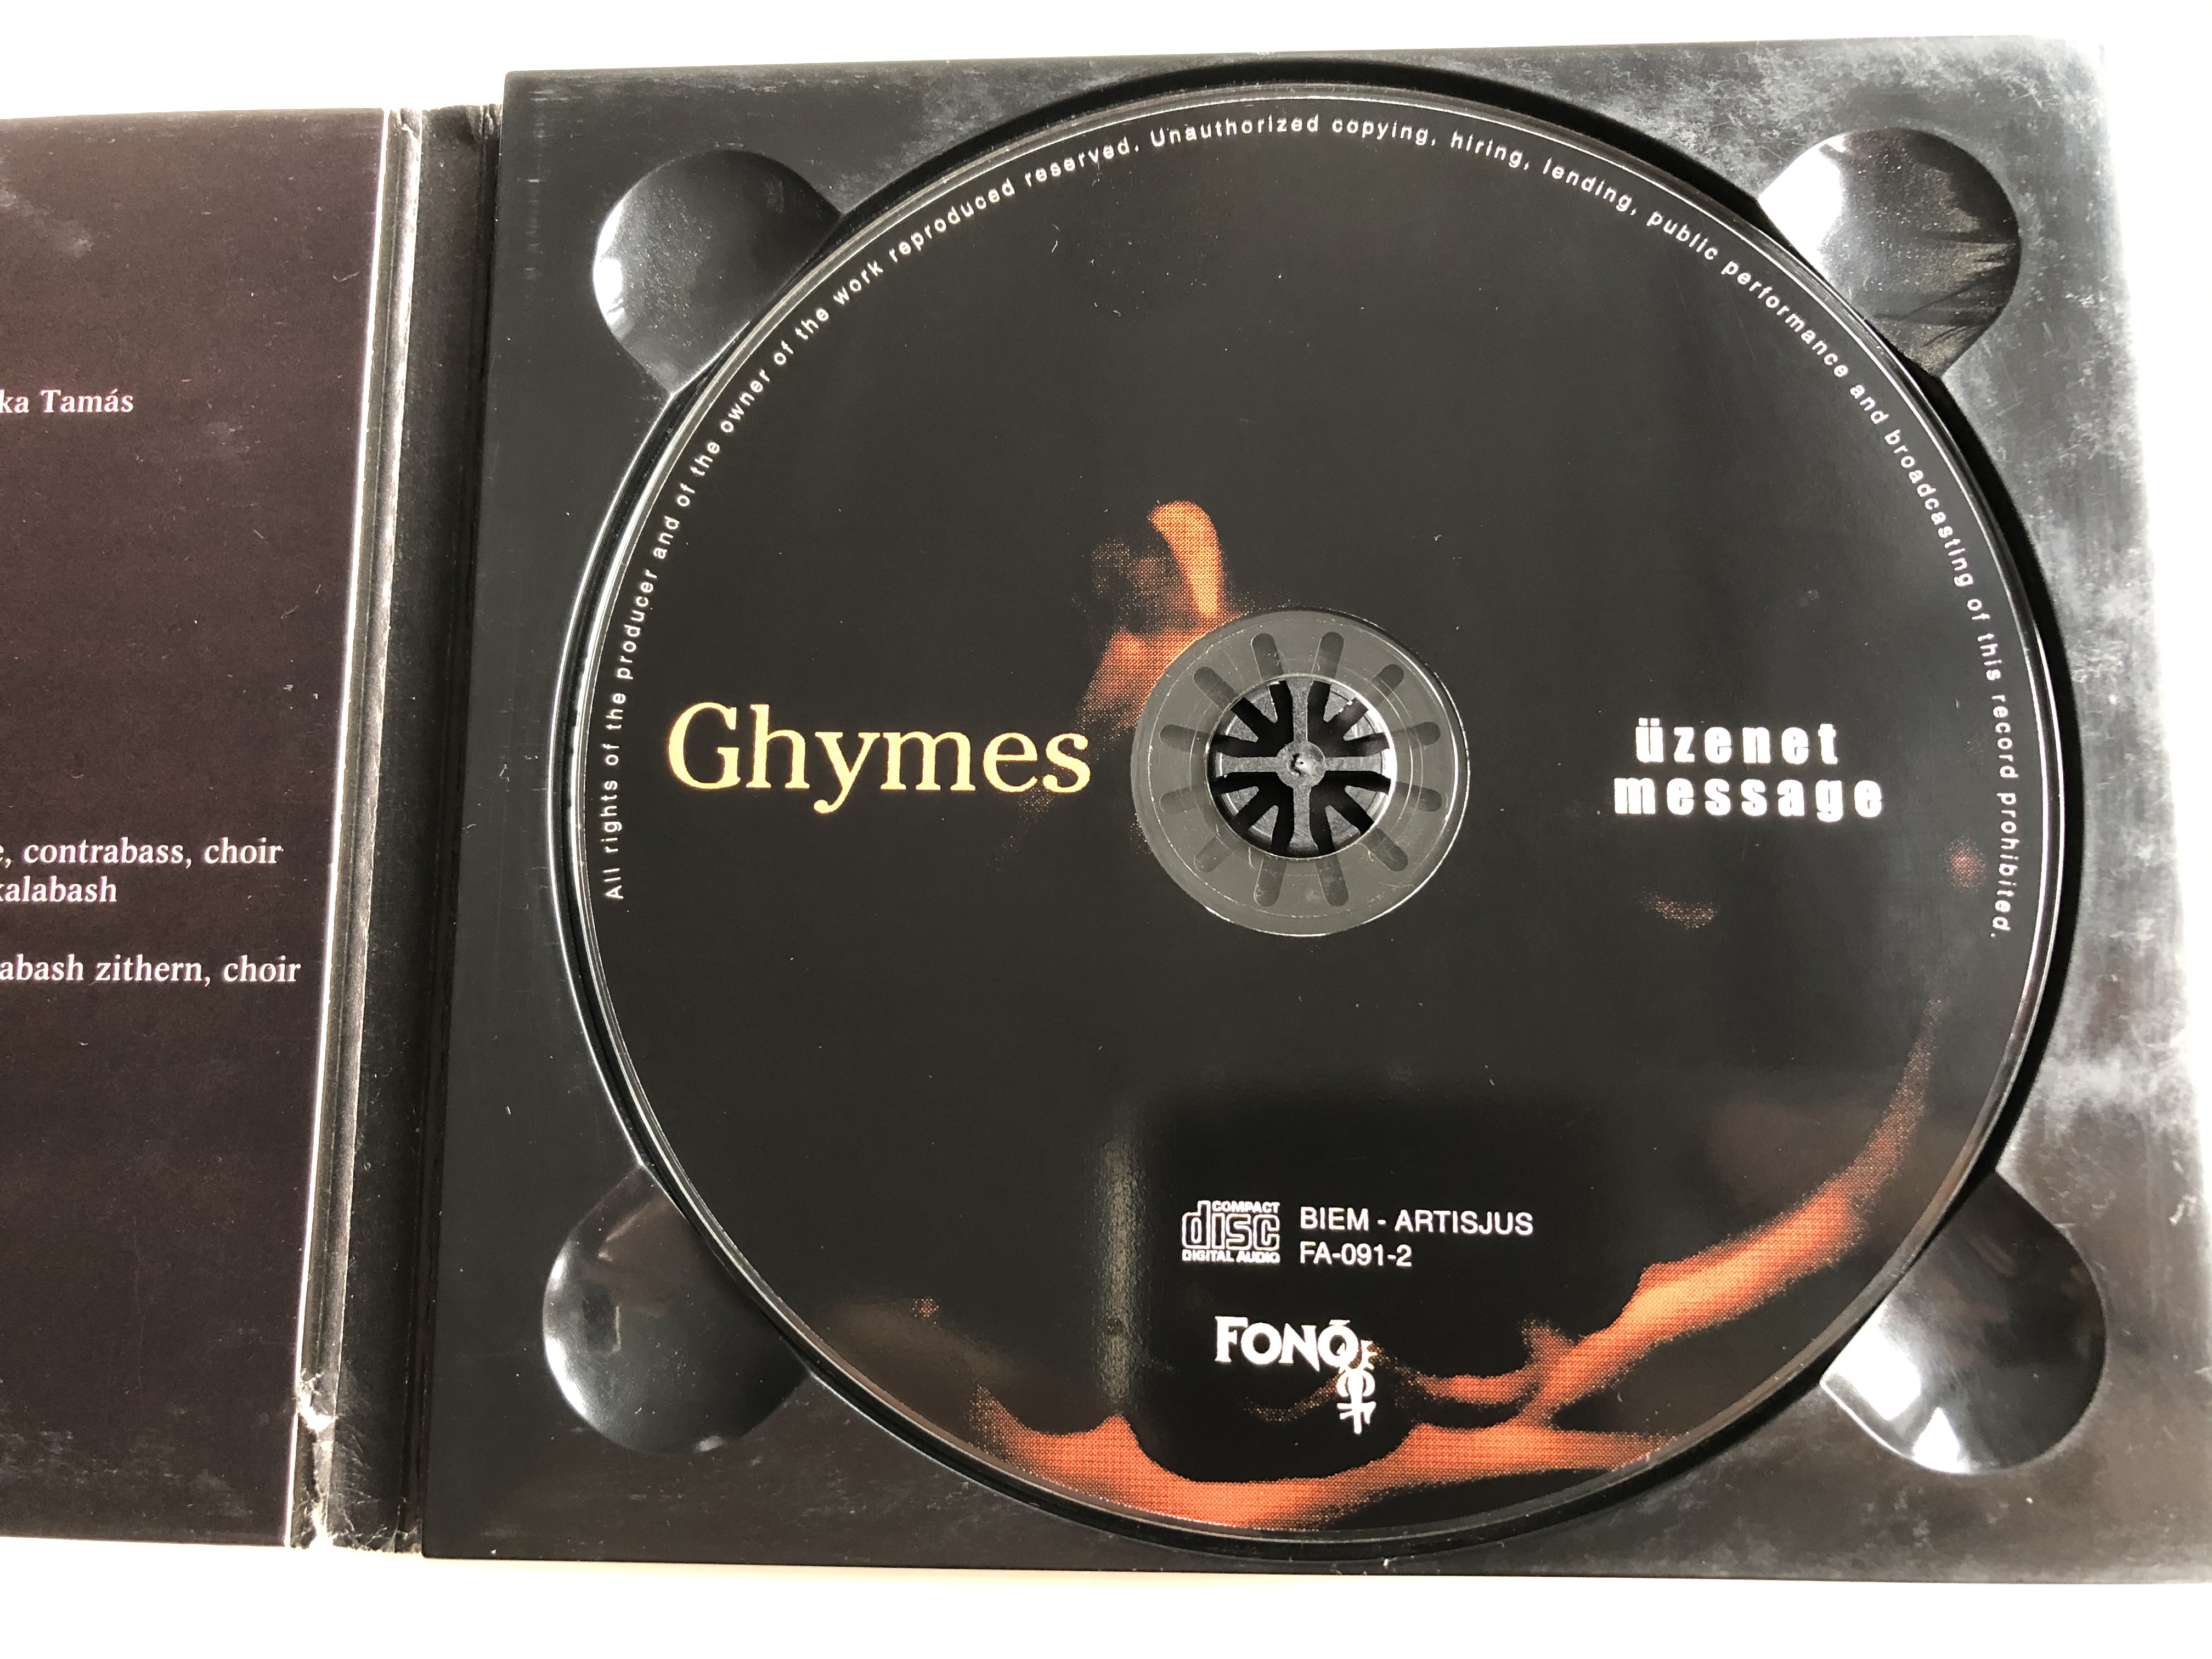 ghymes-zenet-message-fon-records-audio-cd-2001-fa-091-2-3-.jpg